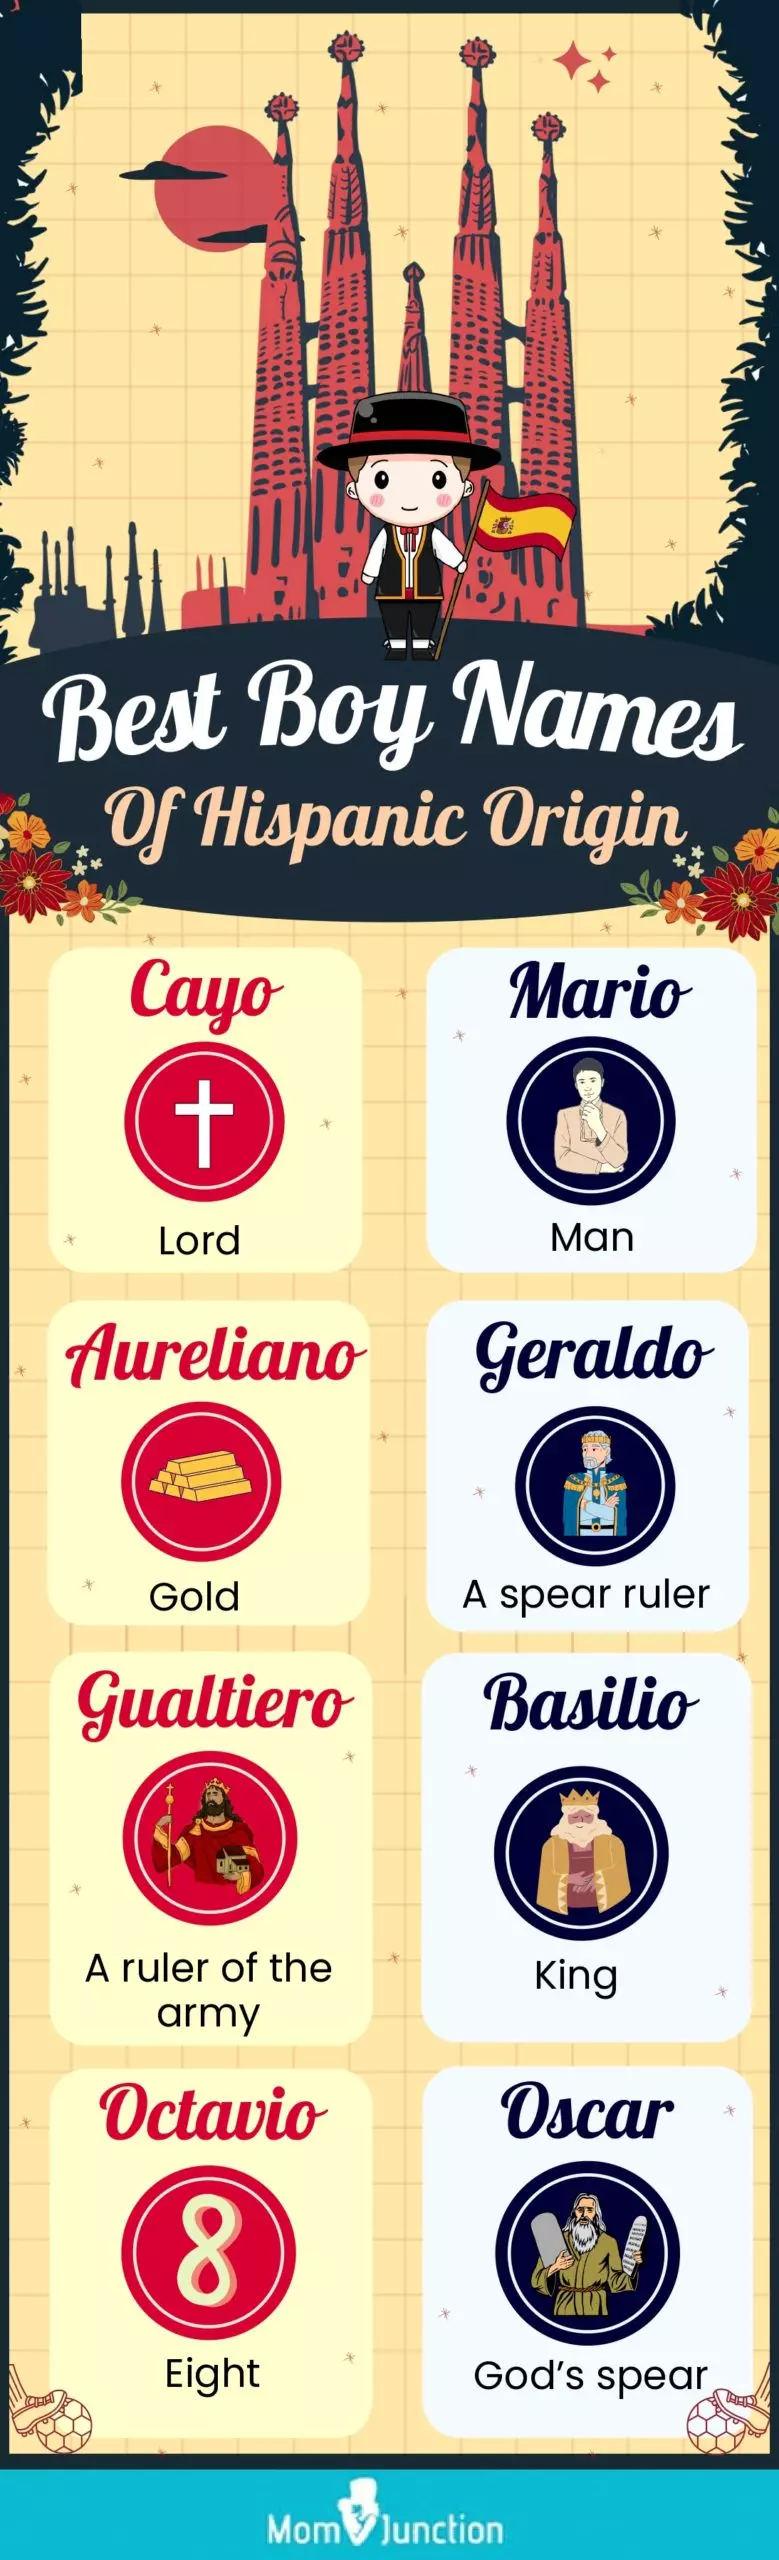 best boy names of hispanic origin (infographic)